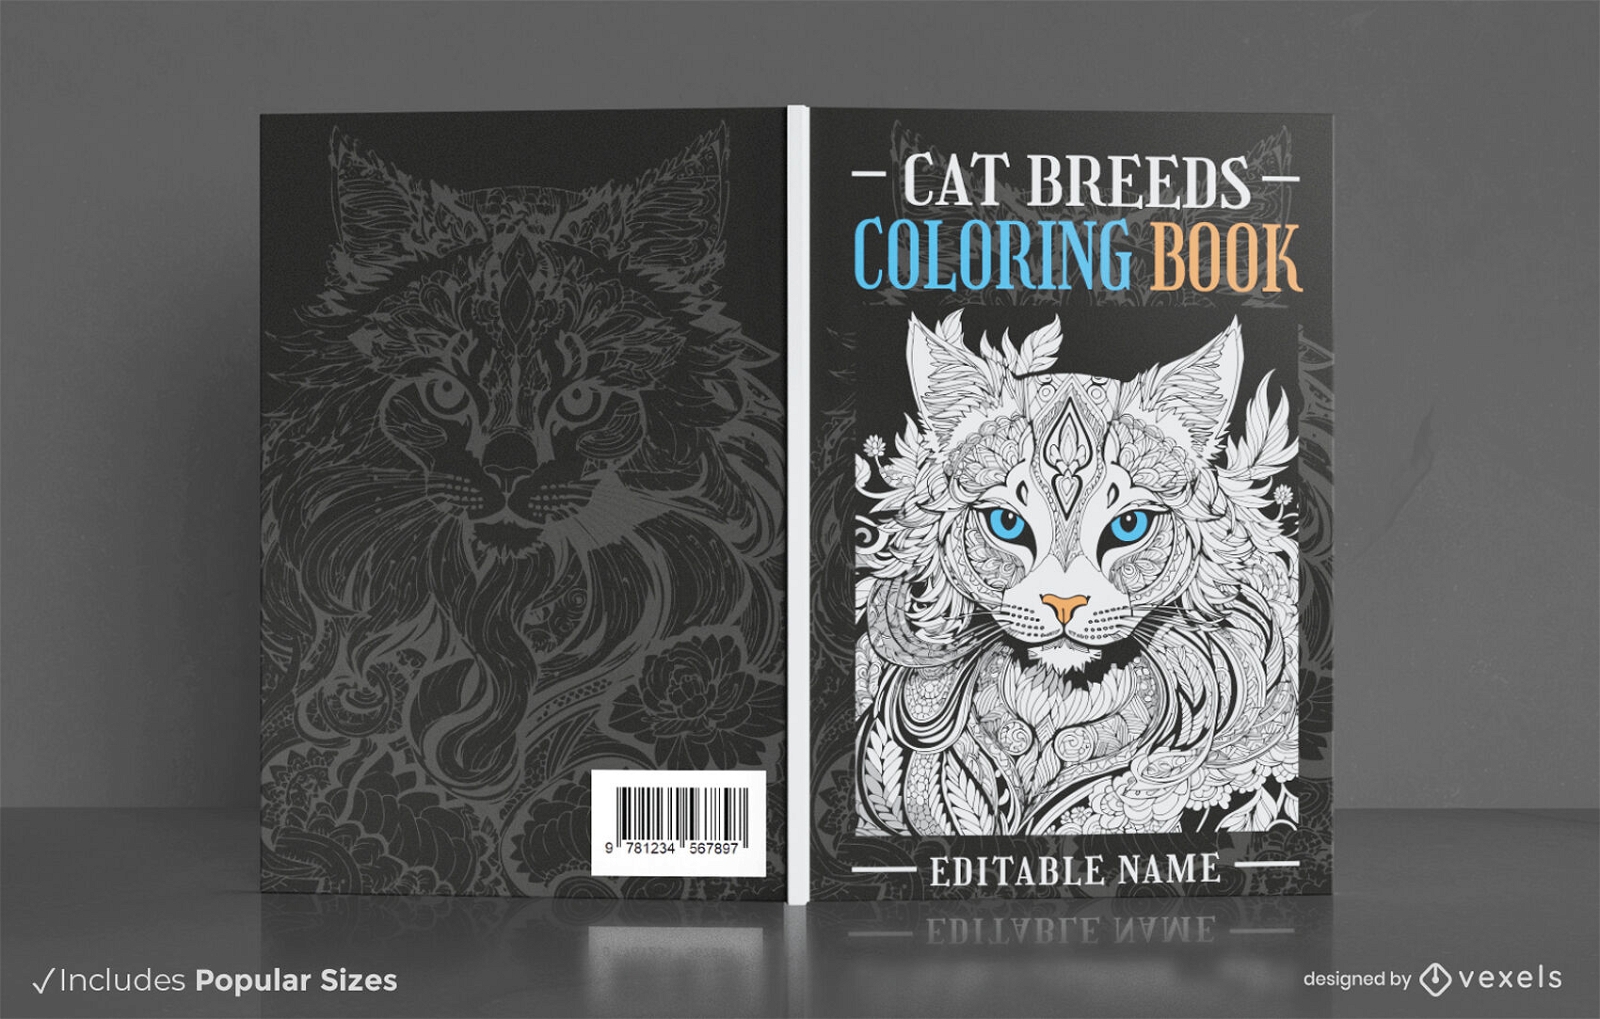 Cat breeds coloring book cover design KDP